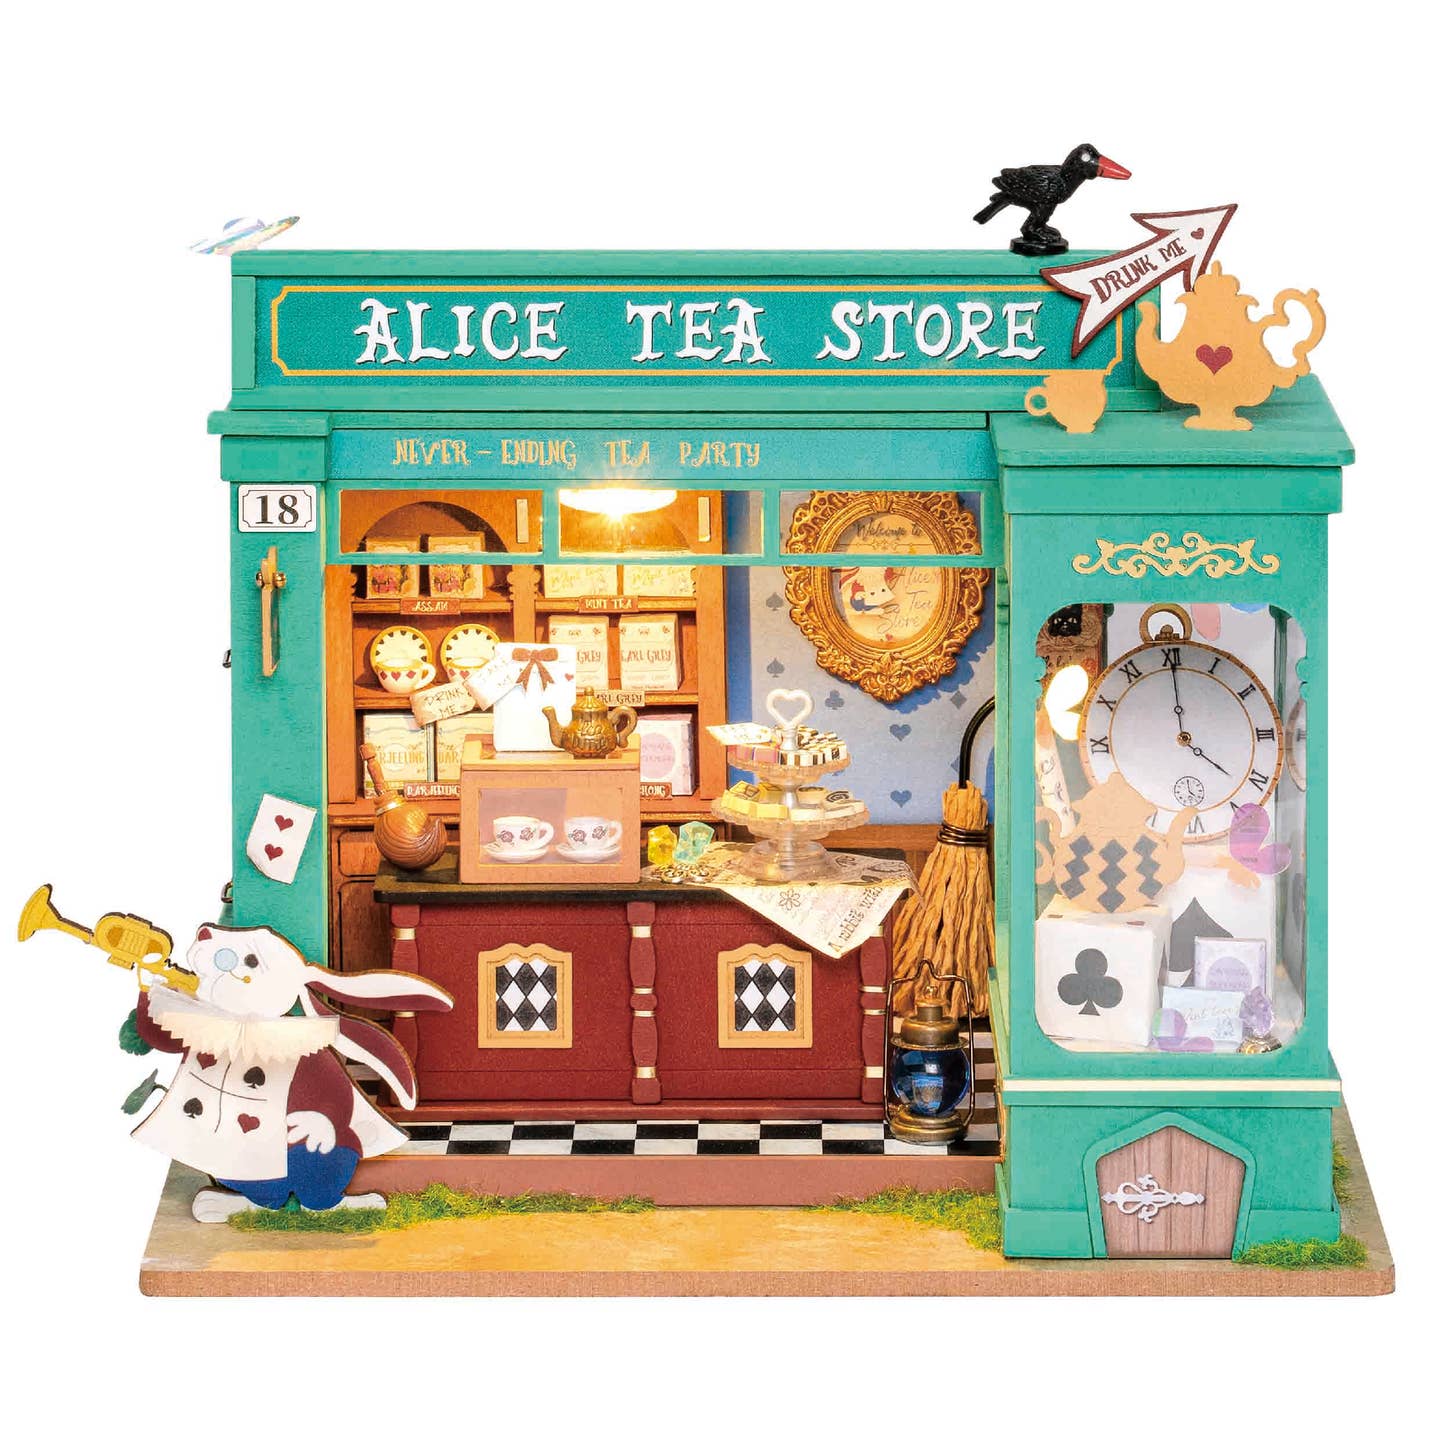 Diy Miniature House Kit: Alice's Tea Store